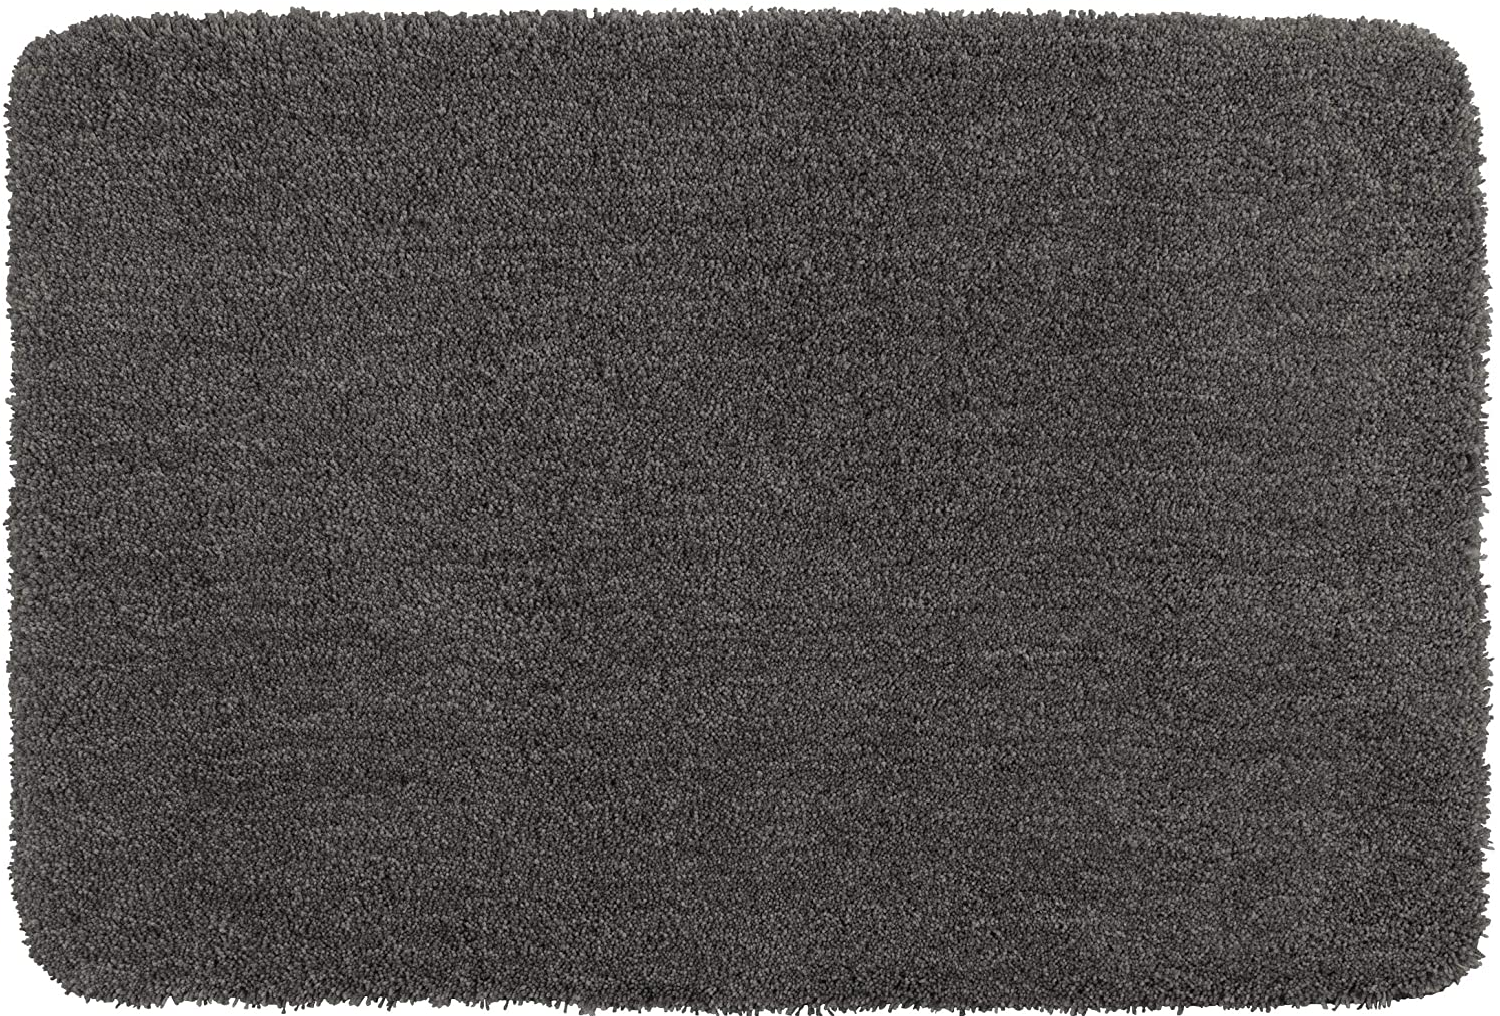 Badteppich Belize Mouse Grey, 55 x 65 cm - Badematte, sicher, flauschig, fusselfrei, Polyester, 55 x 65 cm, Grau